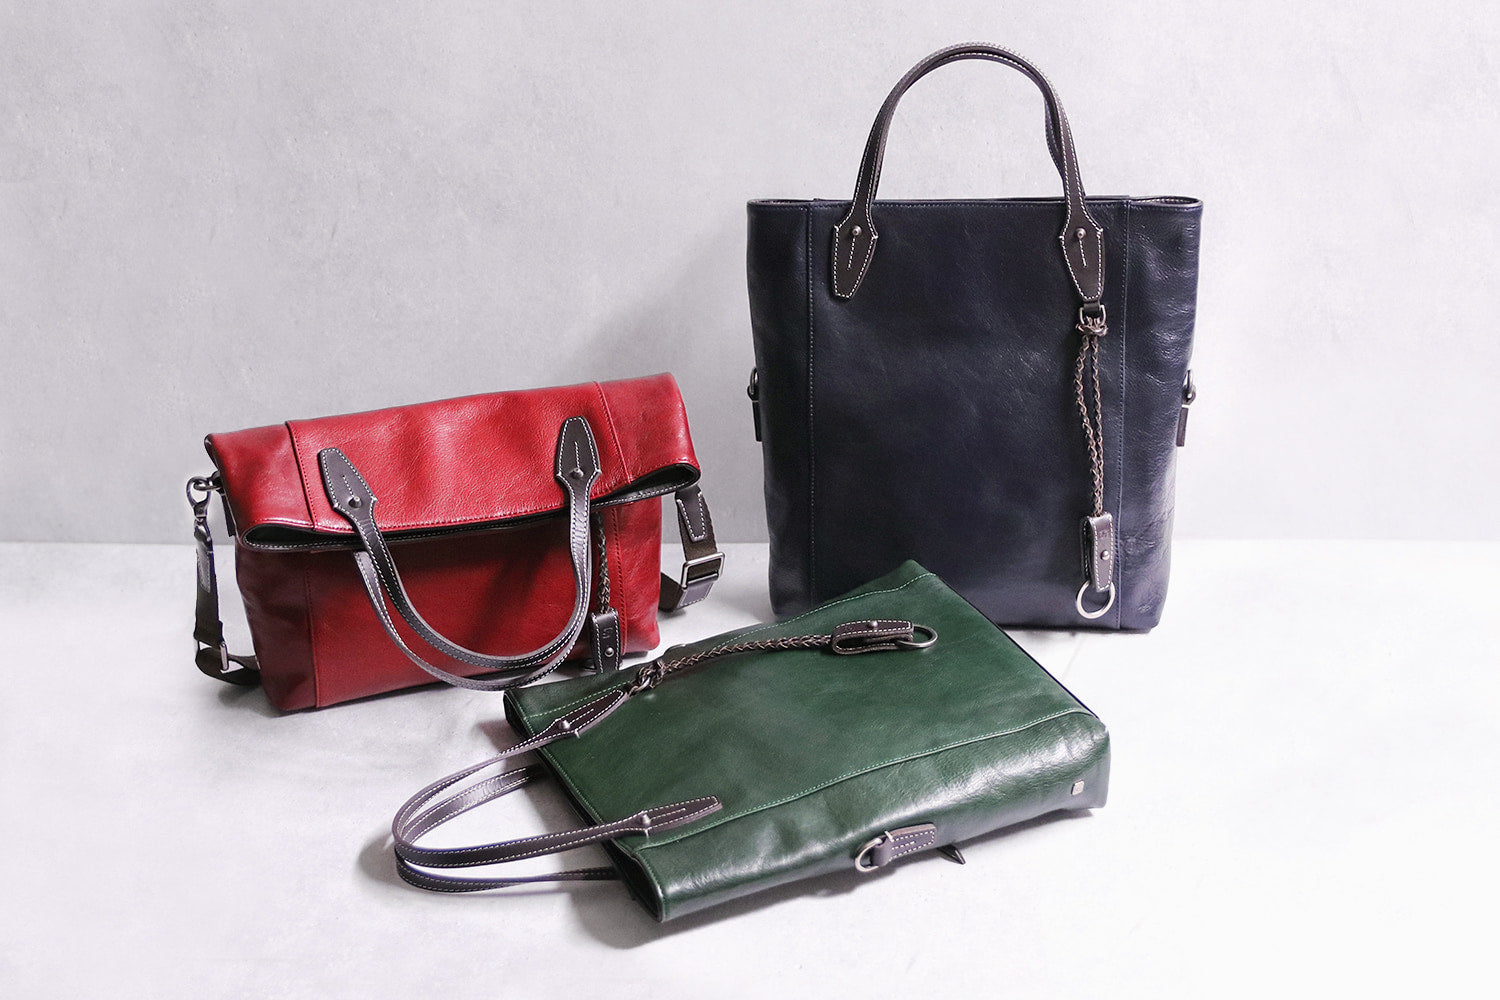 Kiefer neu / LIBERO 2-way bag made of expressive high-quality Italian leather